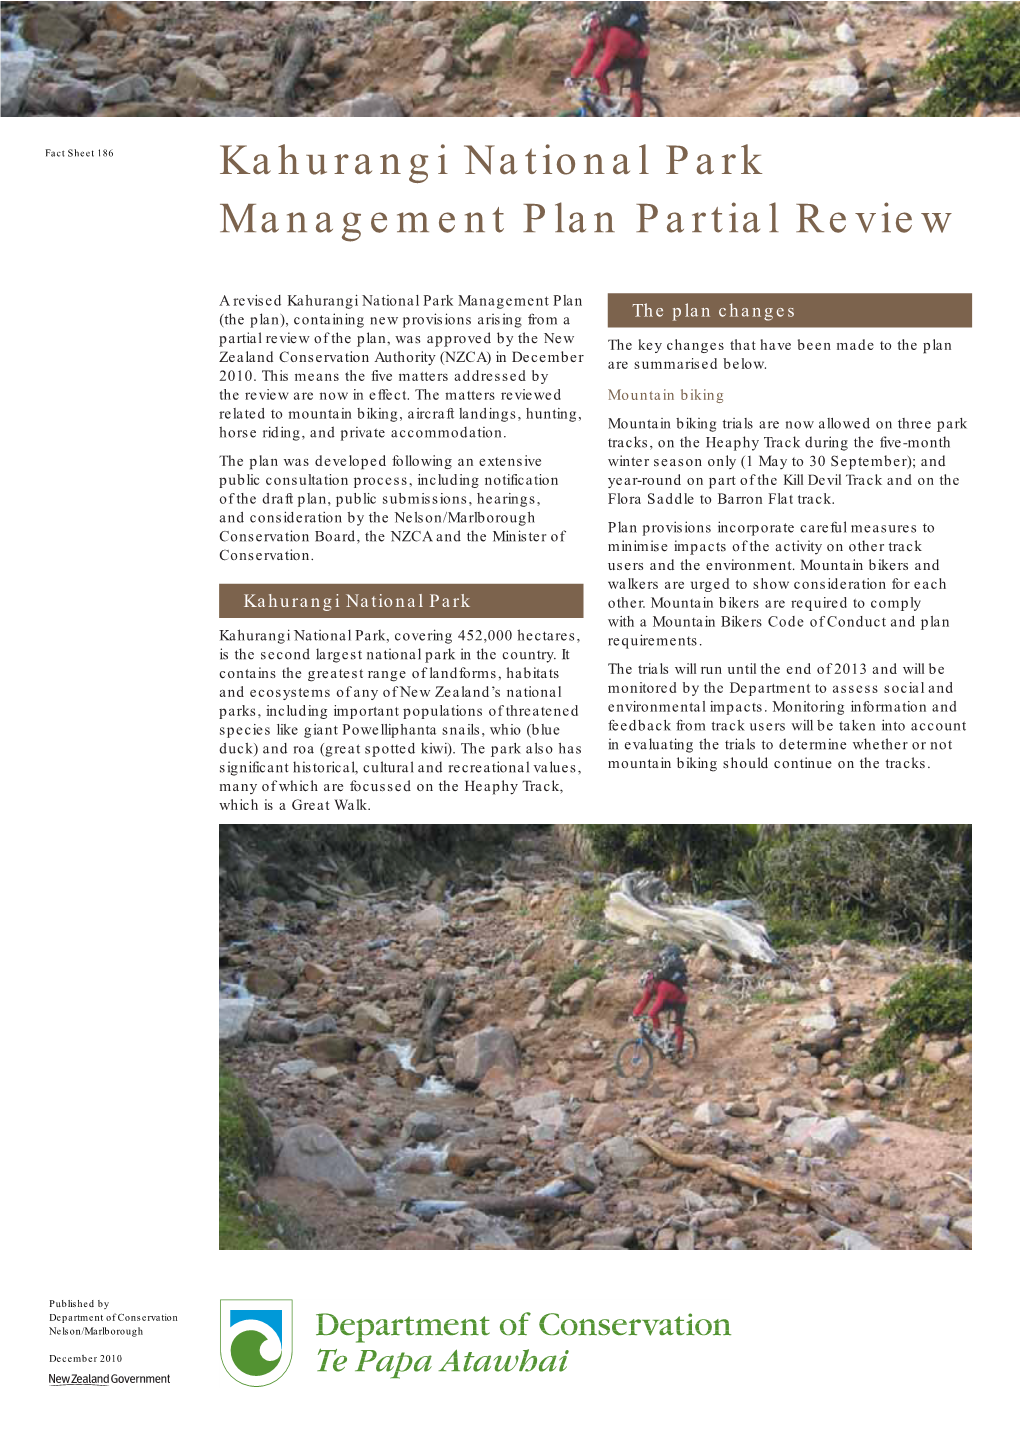 Kahurangi National Park Management Plan Partial Review Factsheet